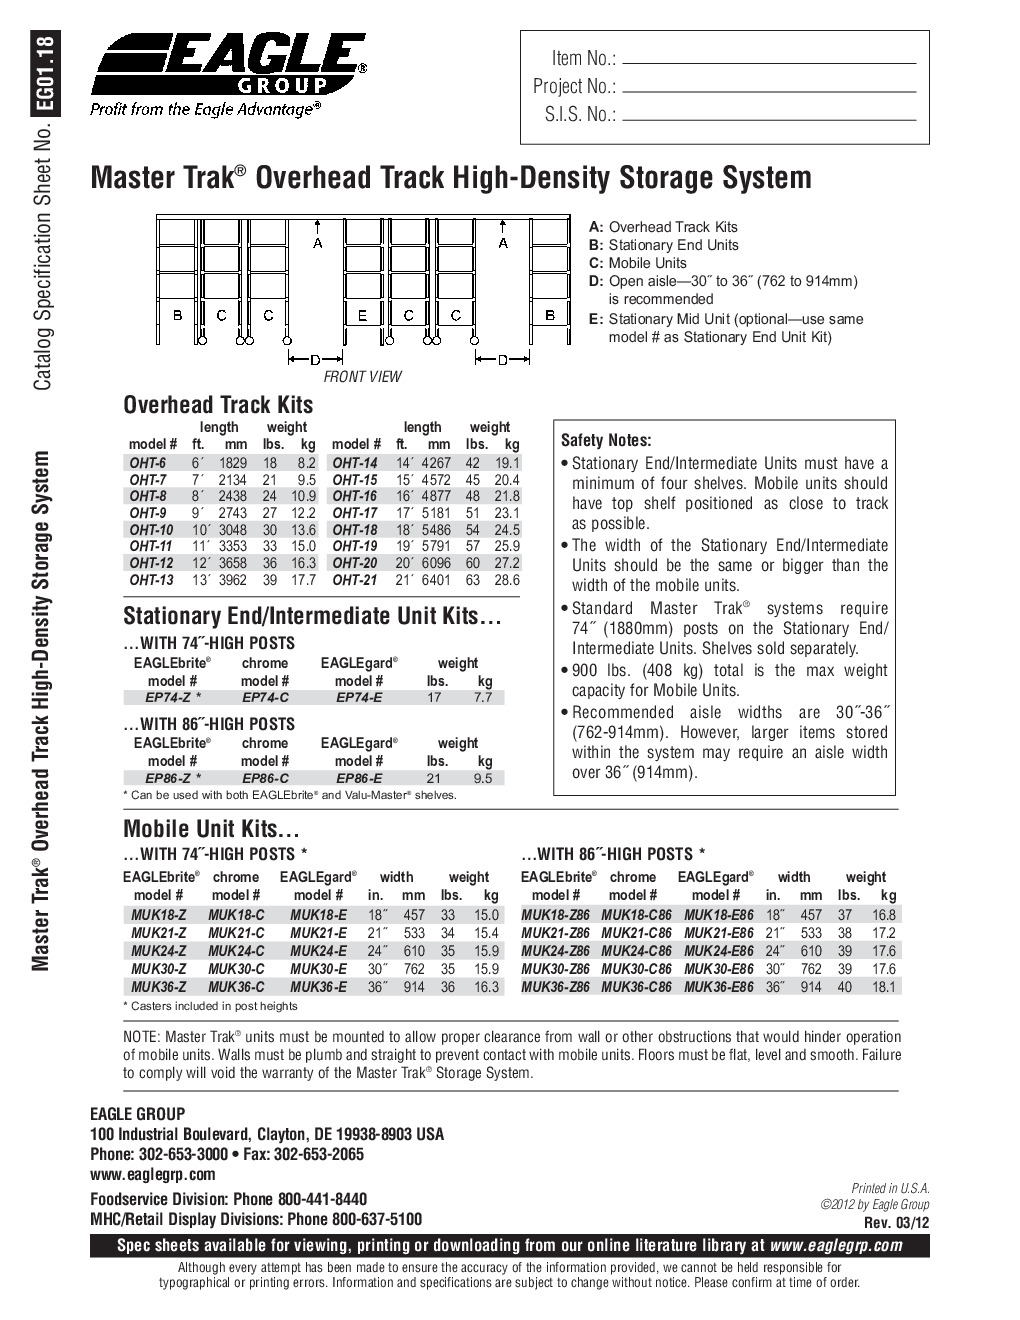 Eagle Group MUK21-Z86 Track Shelving System